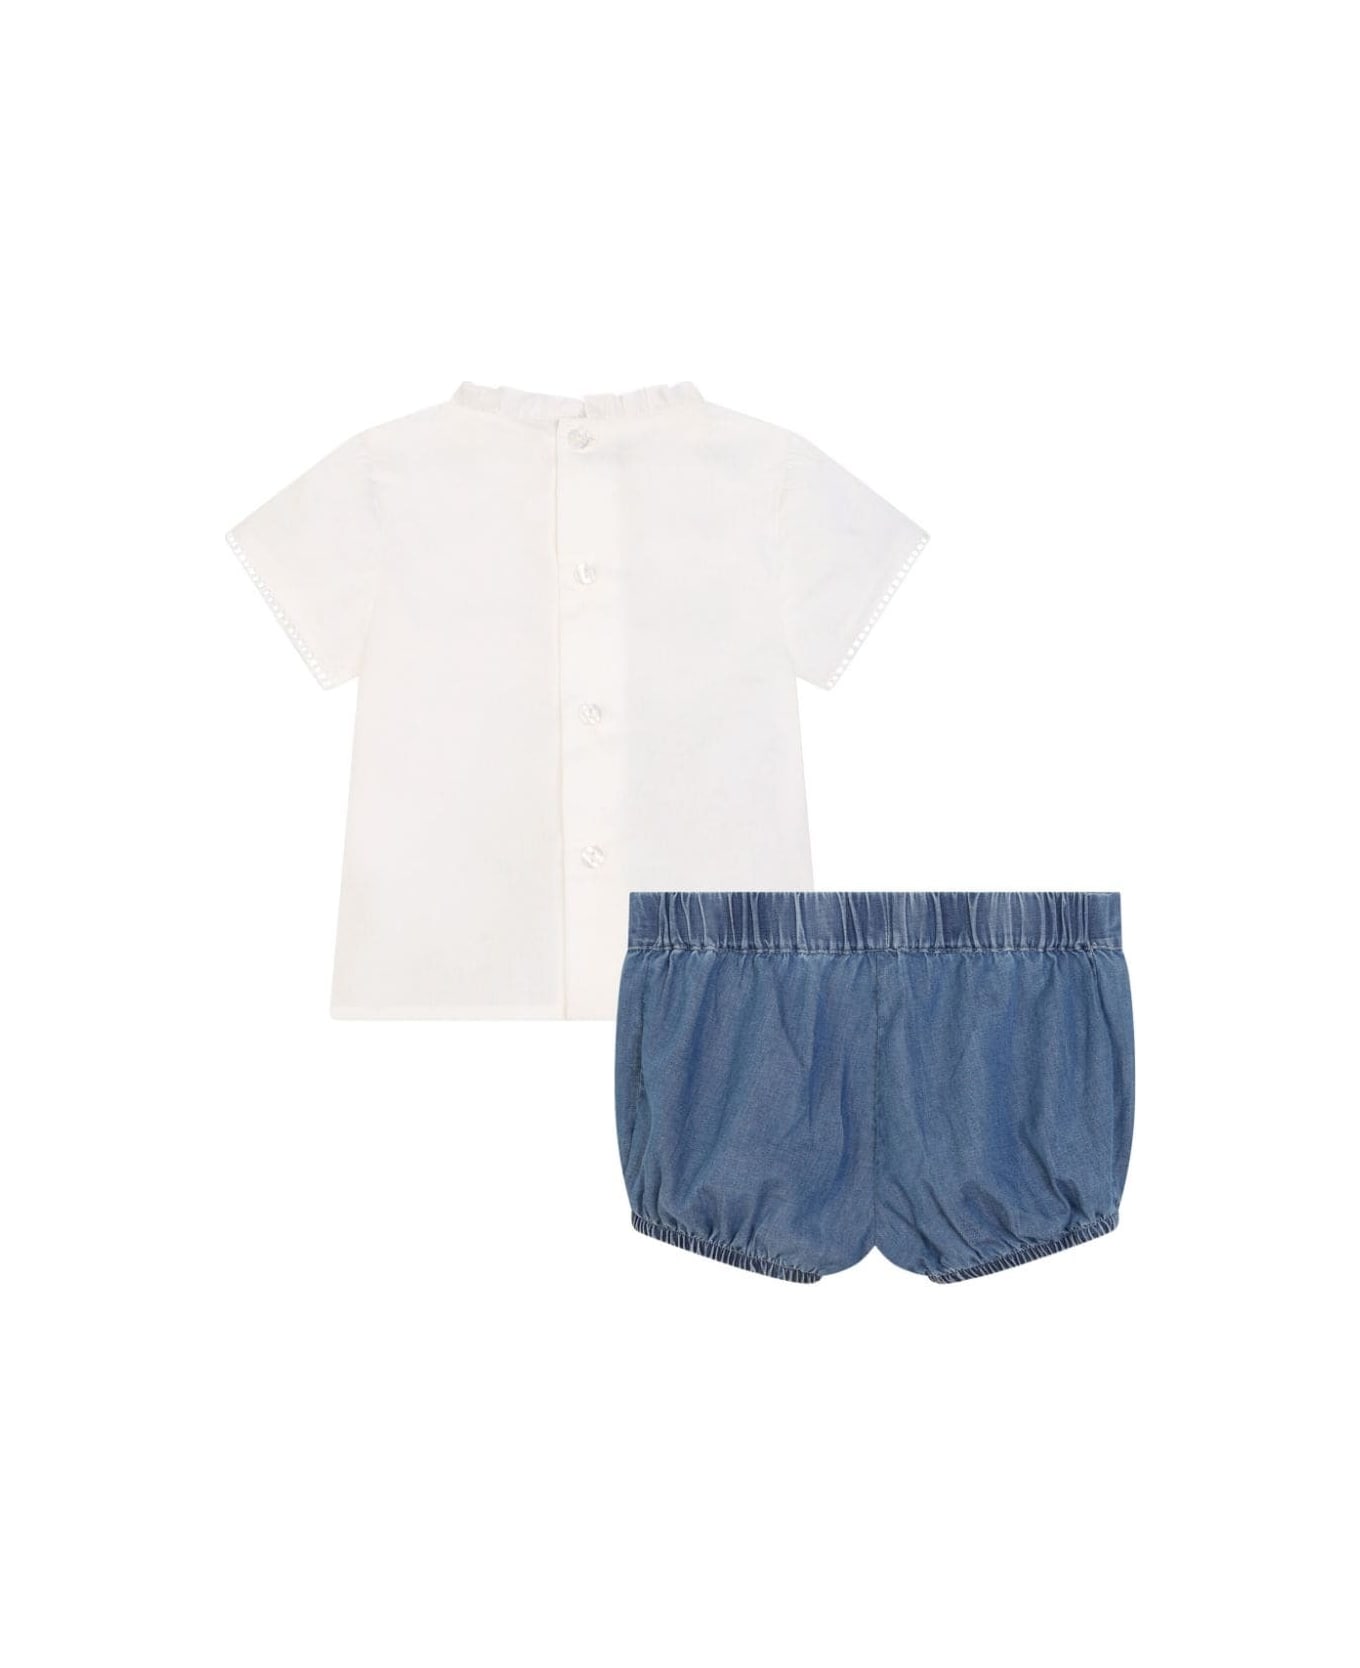 Chloé Blouse And Shorts Set - White